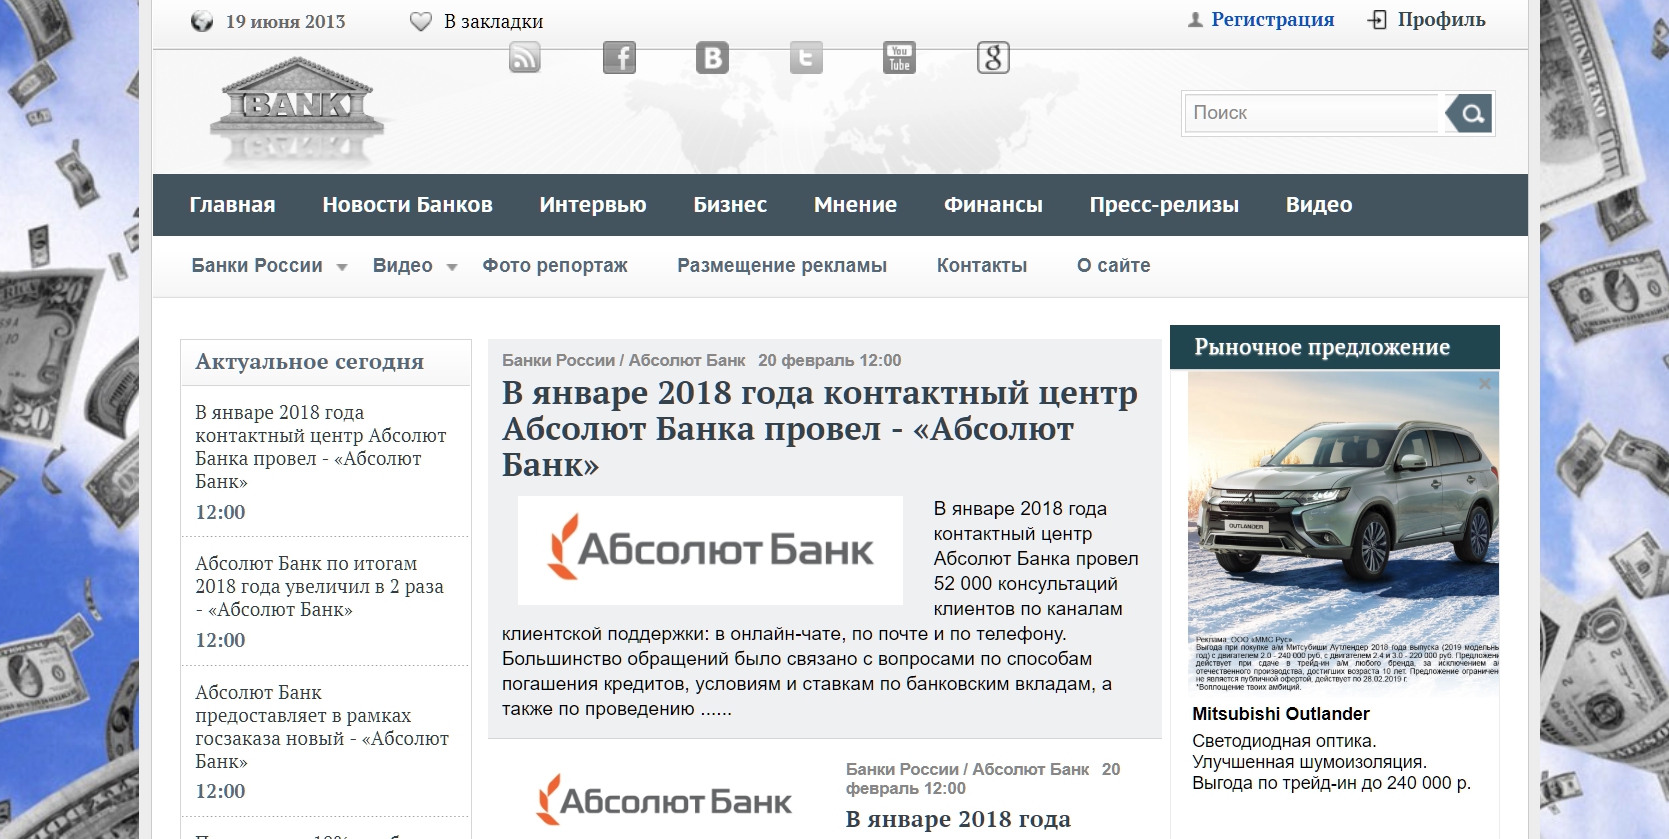 piv-bank.ru - ������� ������